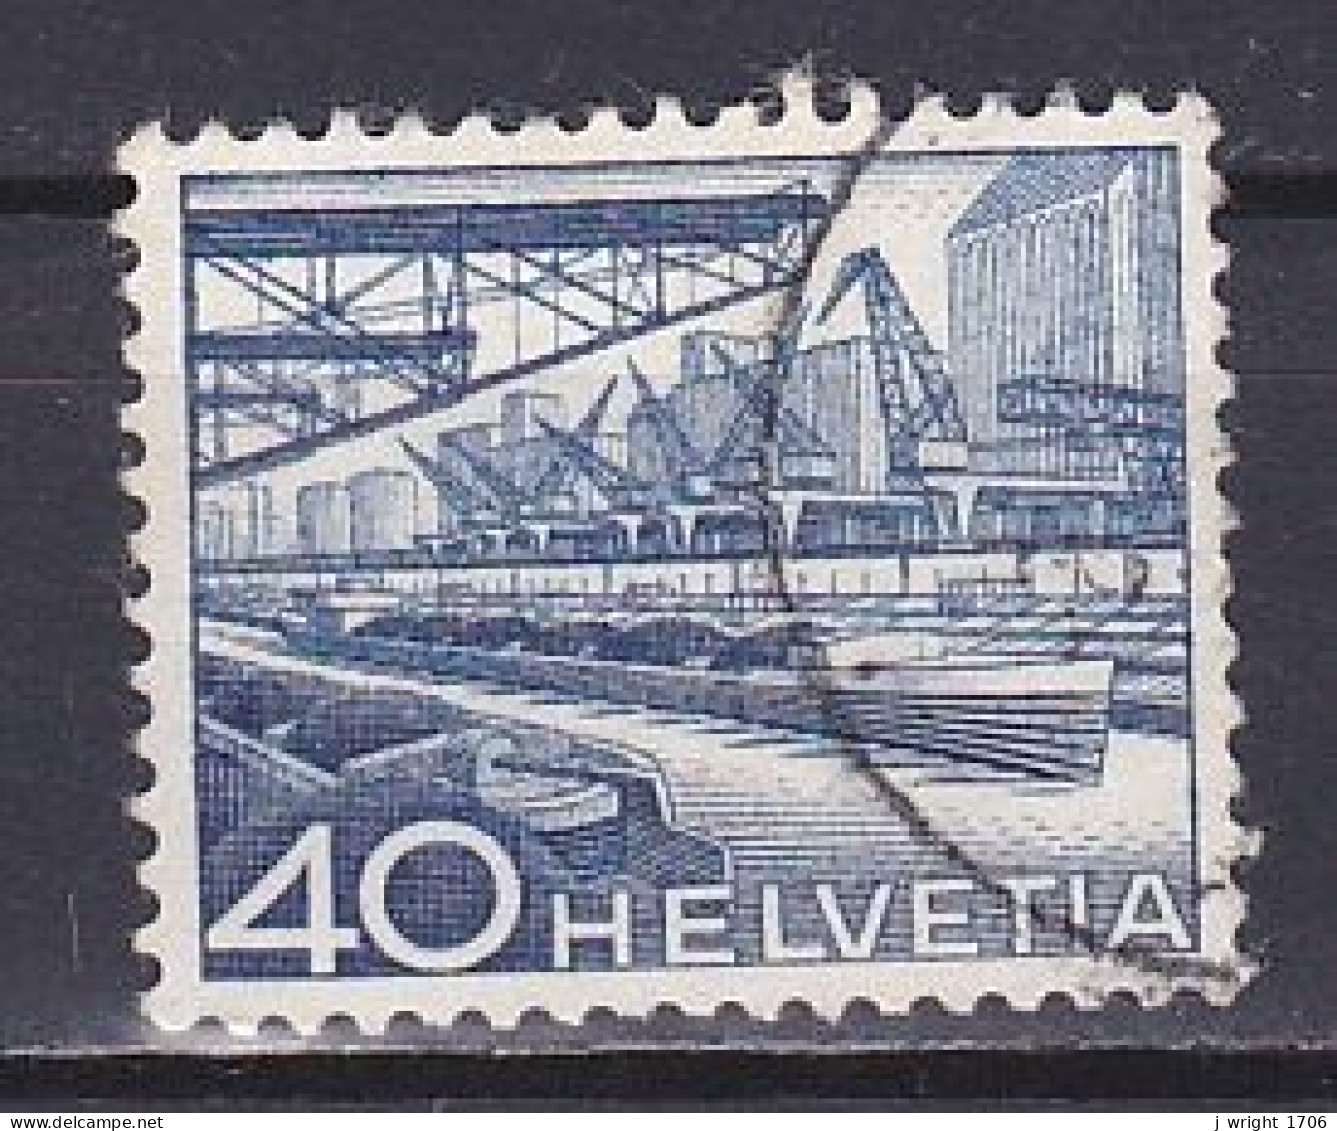 Switzerland, 1949, Landscapes & Technology/Basel Rhine Harbour, 40c, USED - Usados